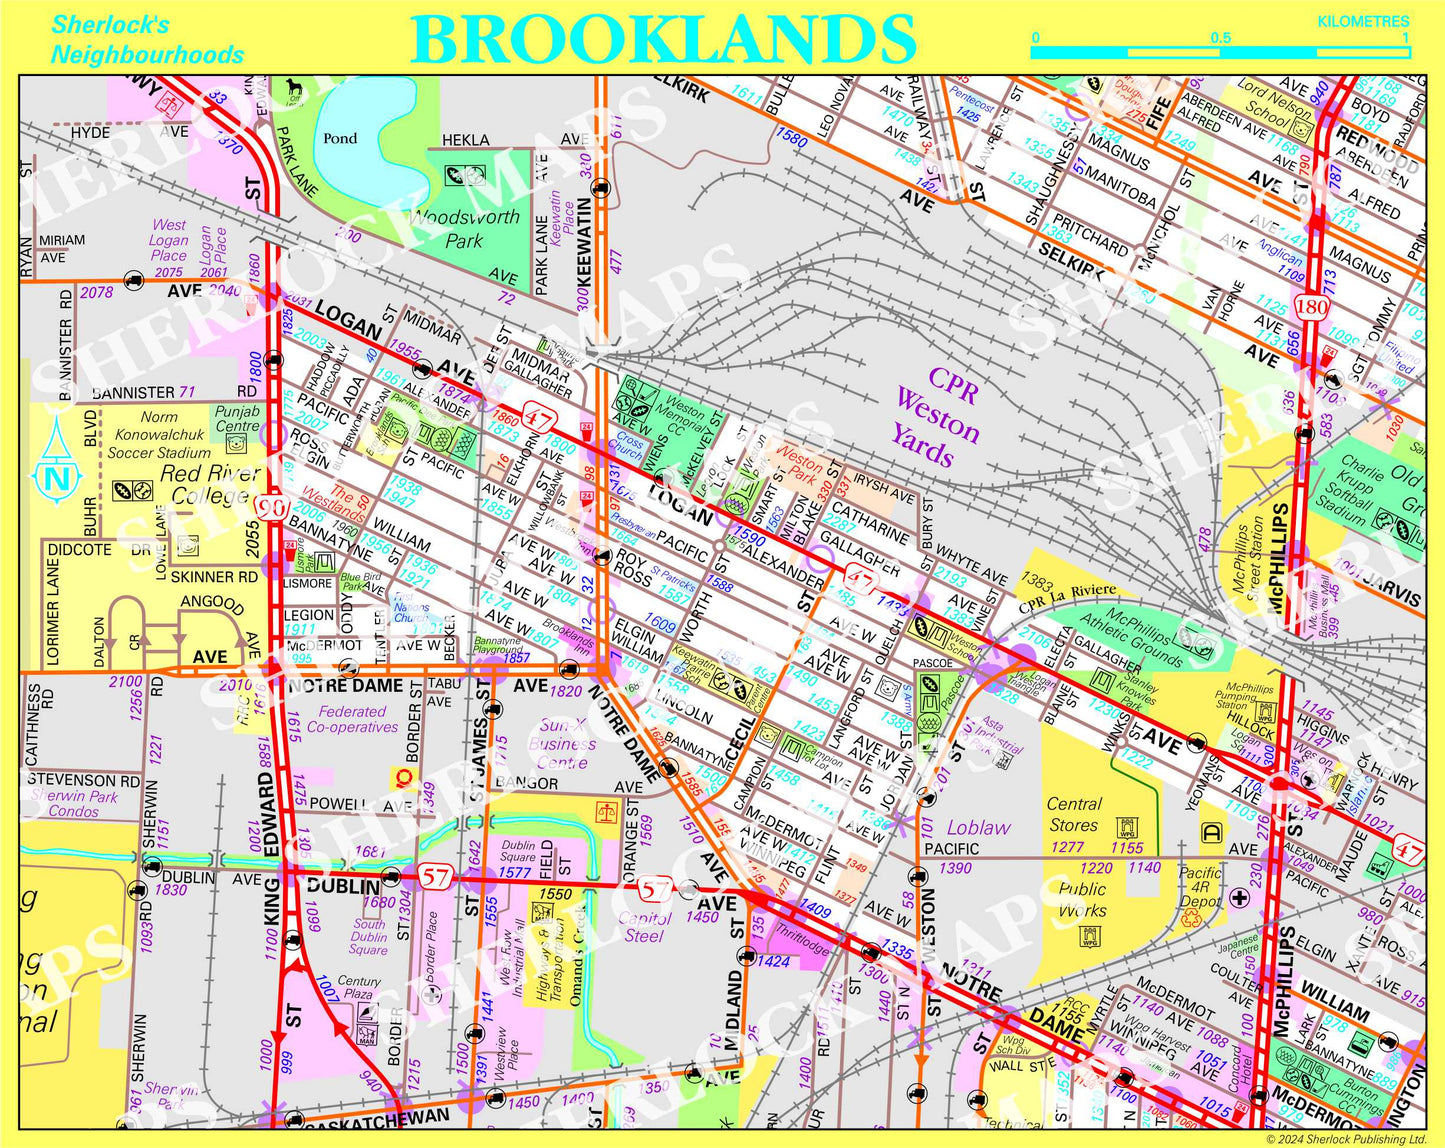 Brooklands - Sherlock's Neighbourhoods